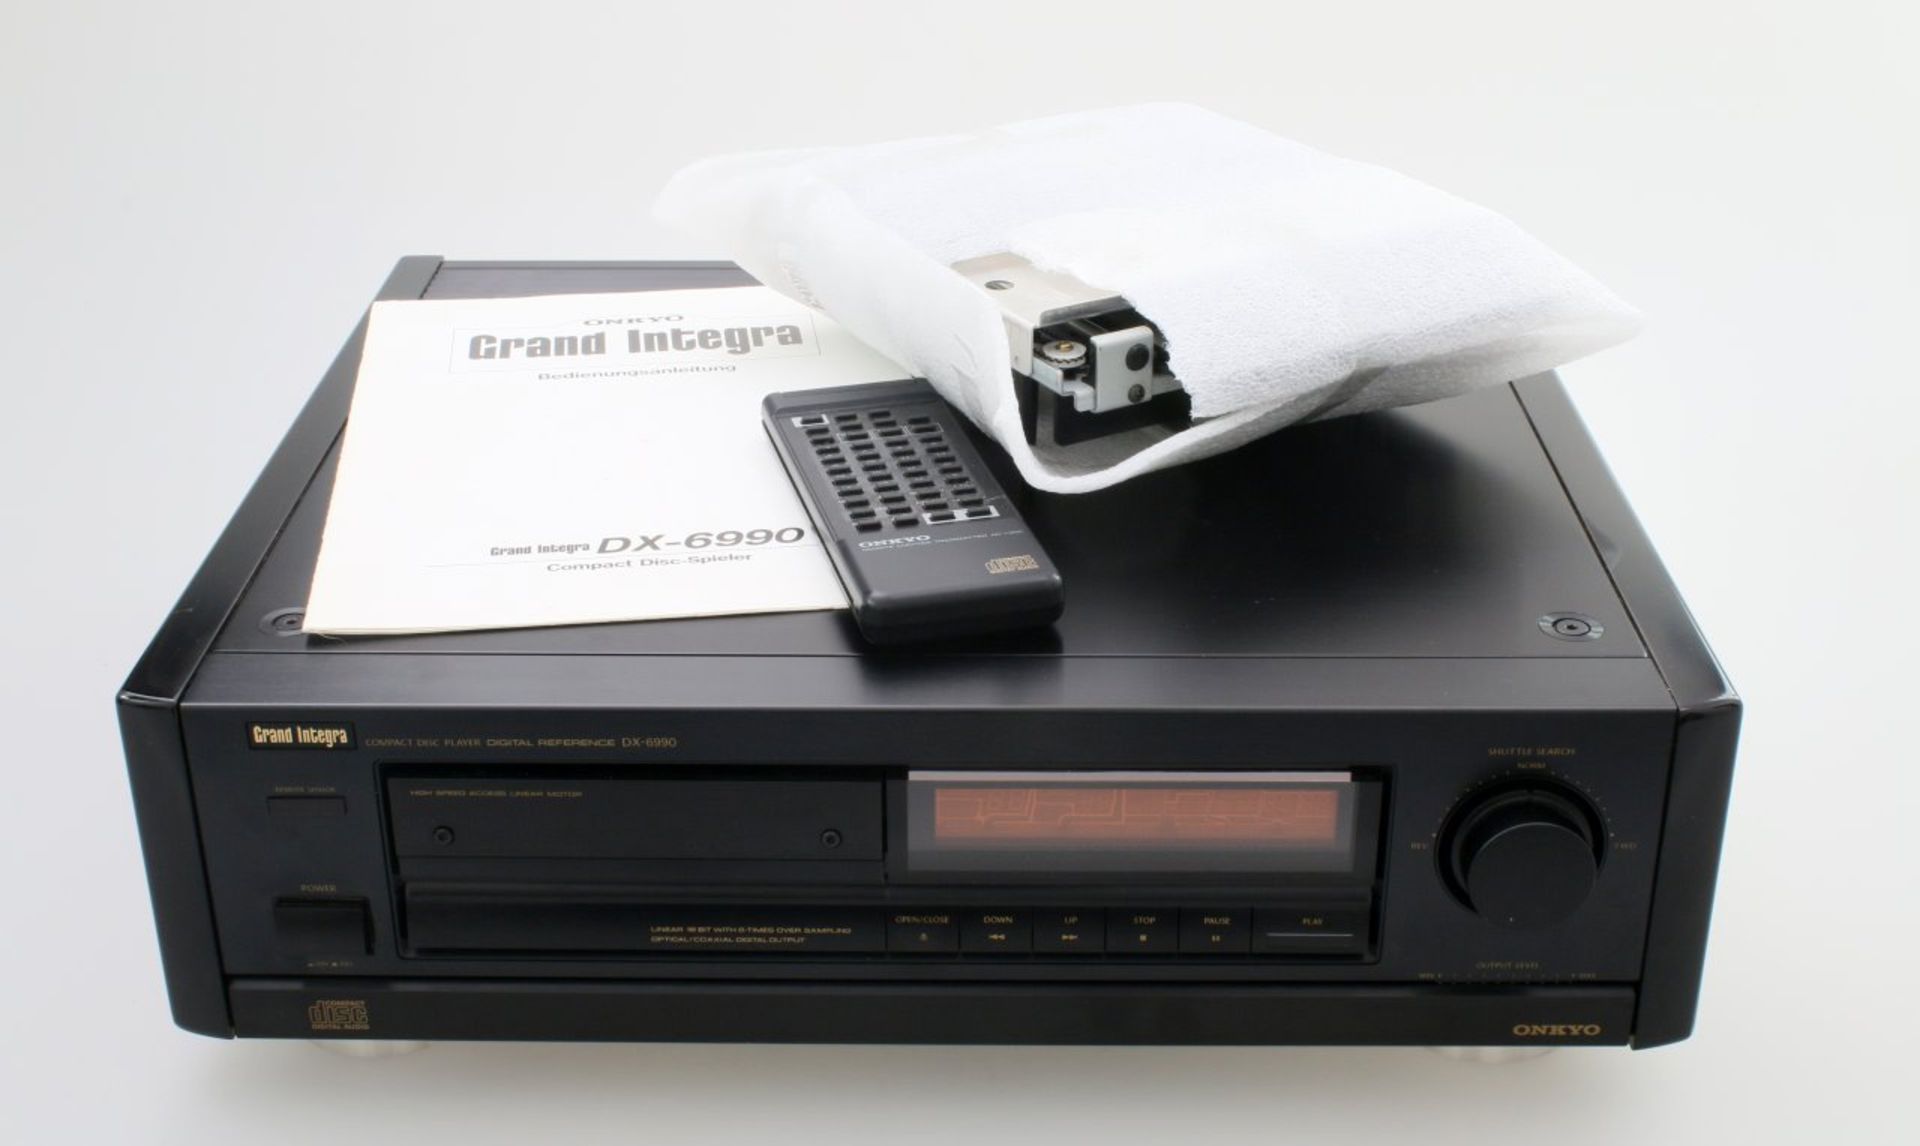 Onkyo - Modell DX-6990 Grand Integra - High End CD-Player Sehr guter Zustand, schwarz,